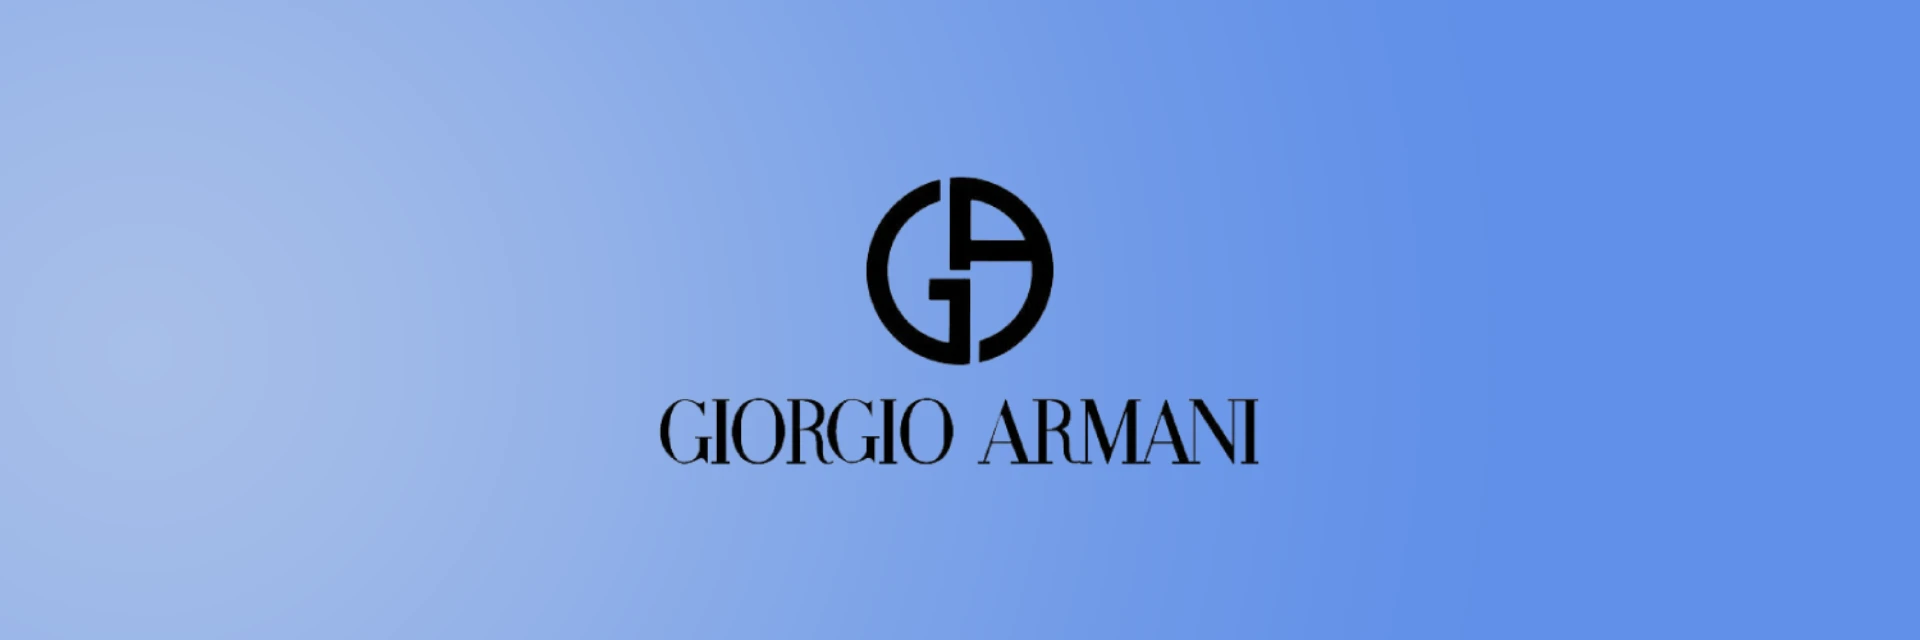 Giorgio Armani Perfumes Banner Image